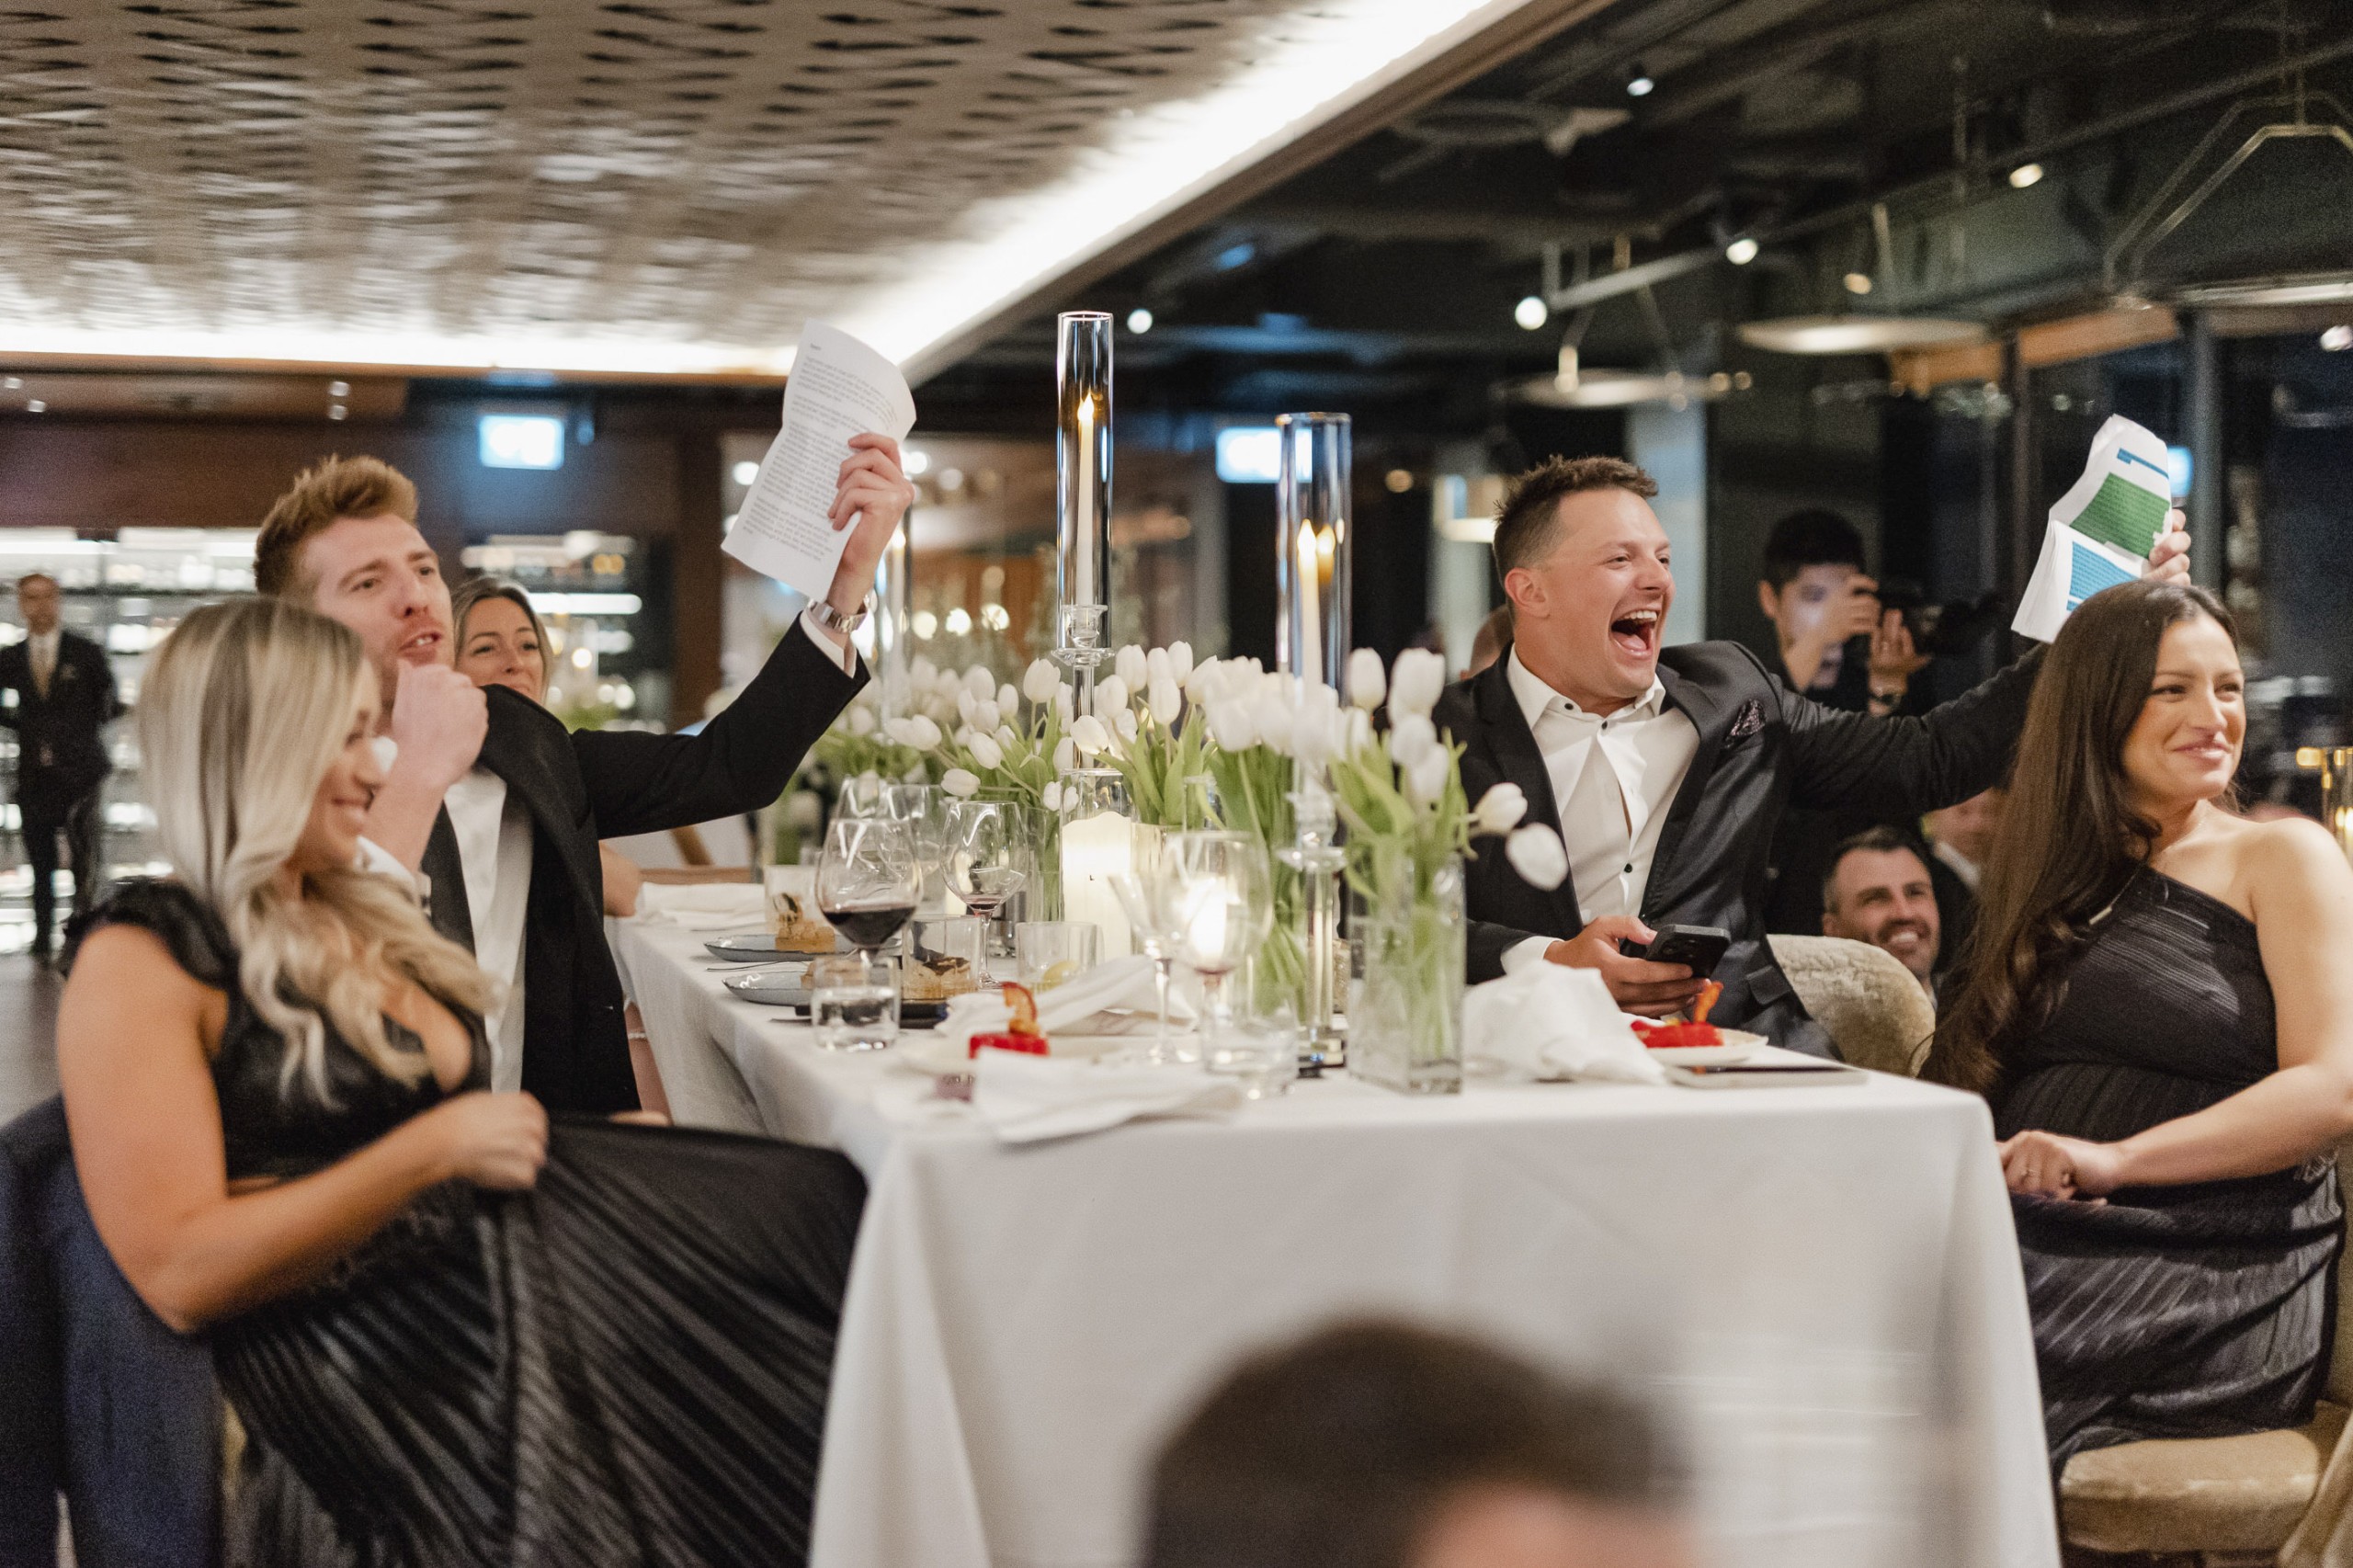 Groomsmen cheering during bride and groom wedding speech at reception.